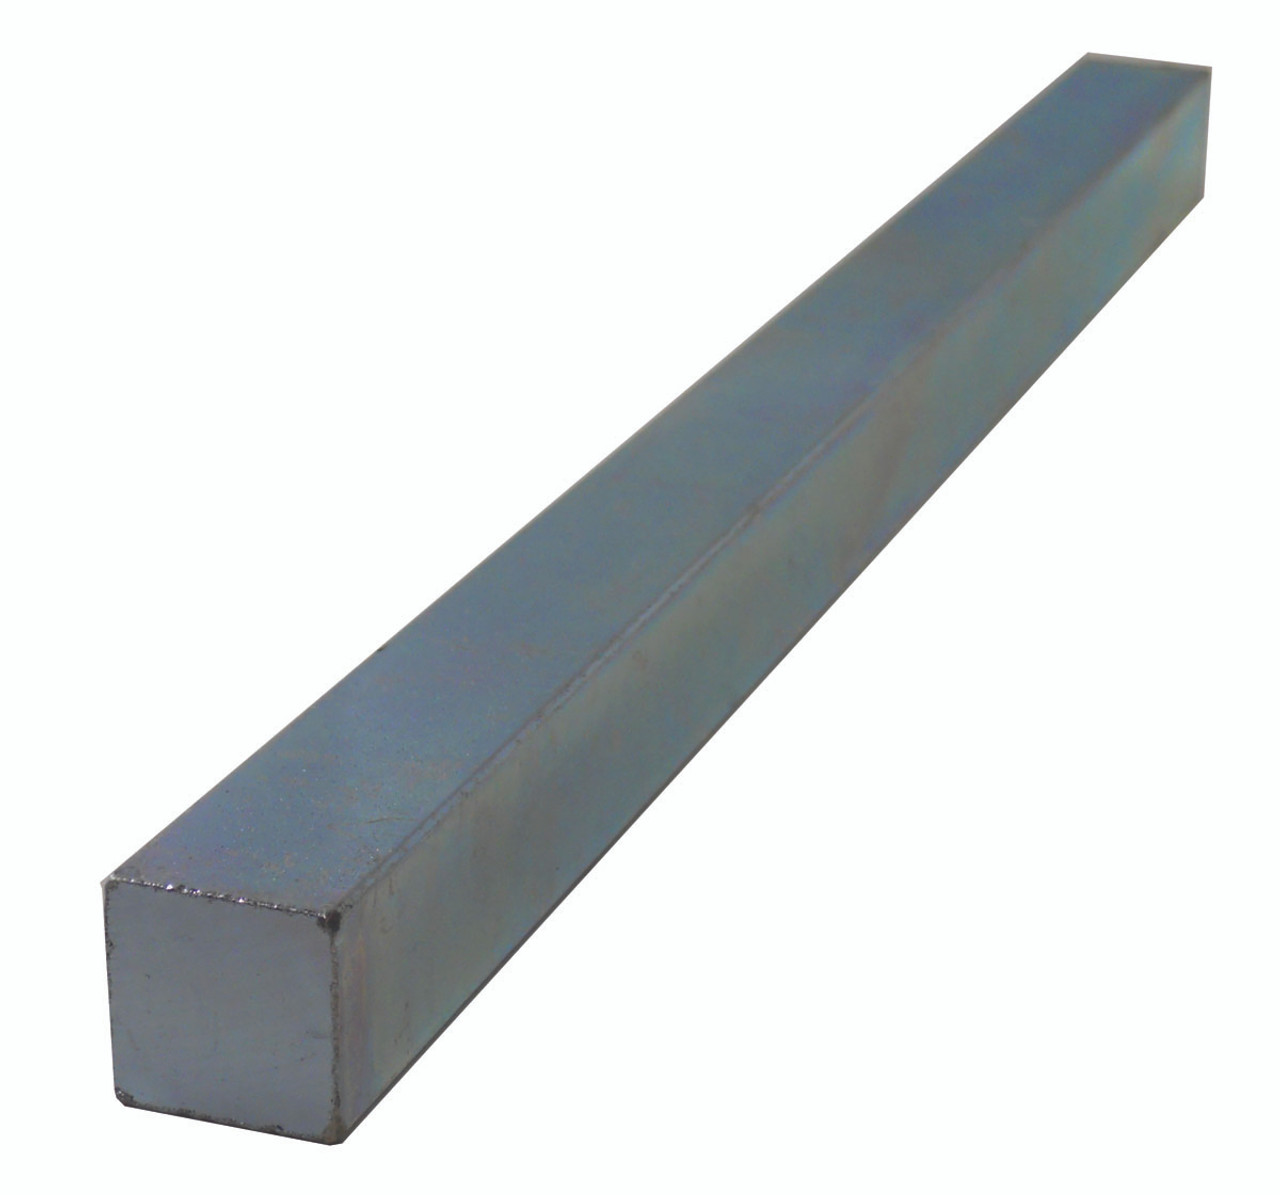 Square SAE 3/4 x 36" Zinc Plated Steel Keystock  .750-36